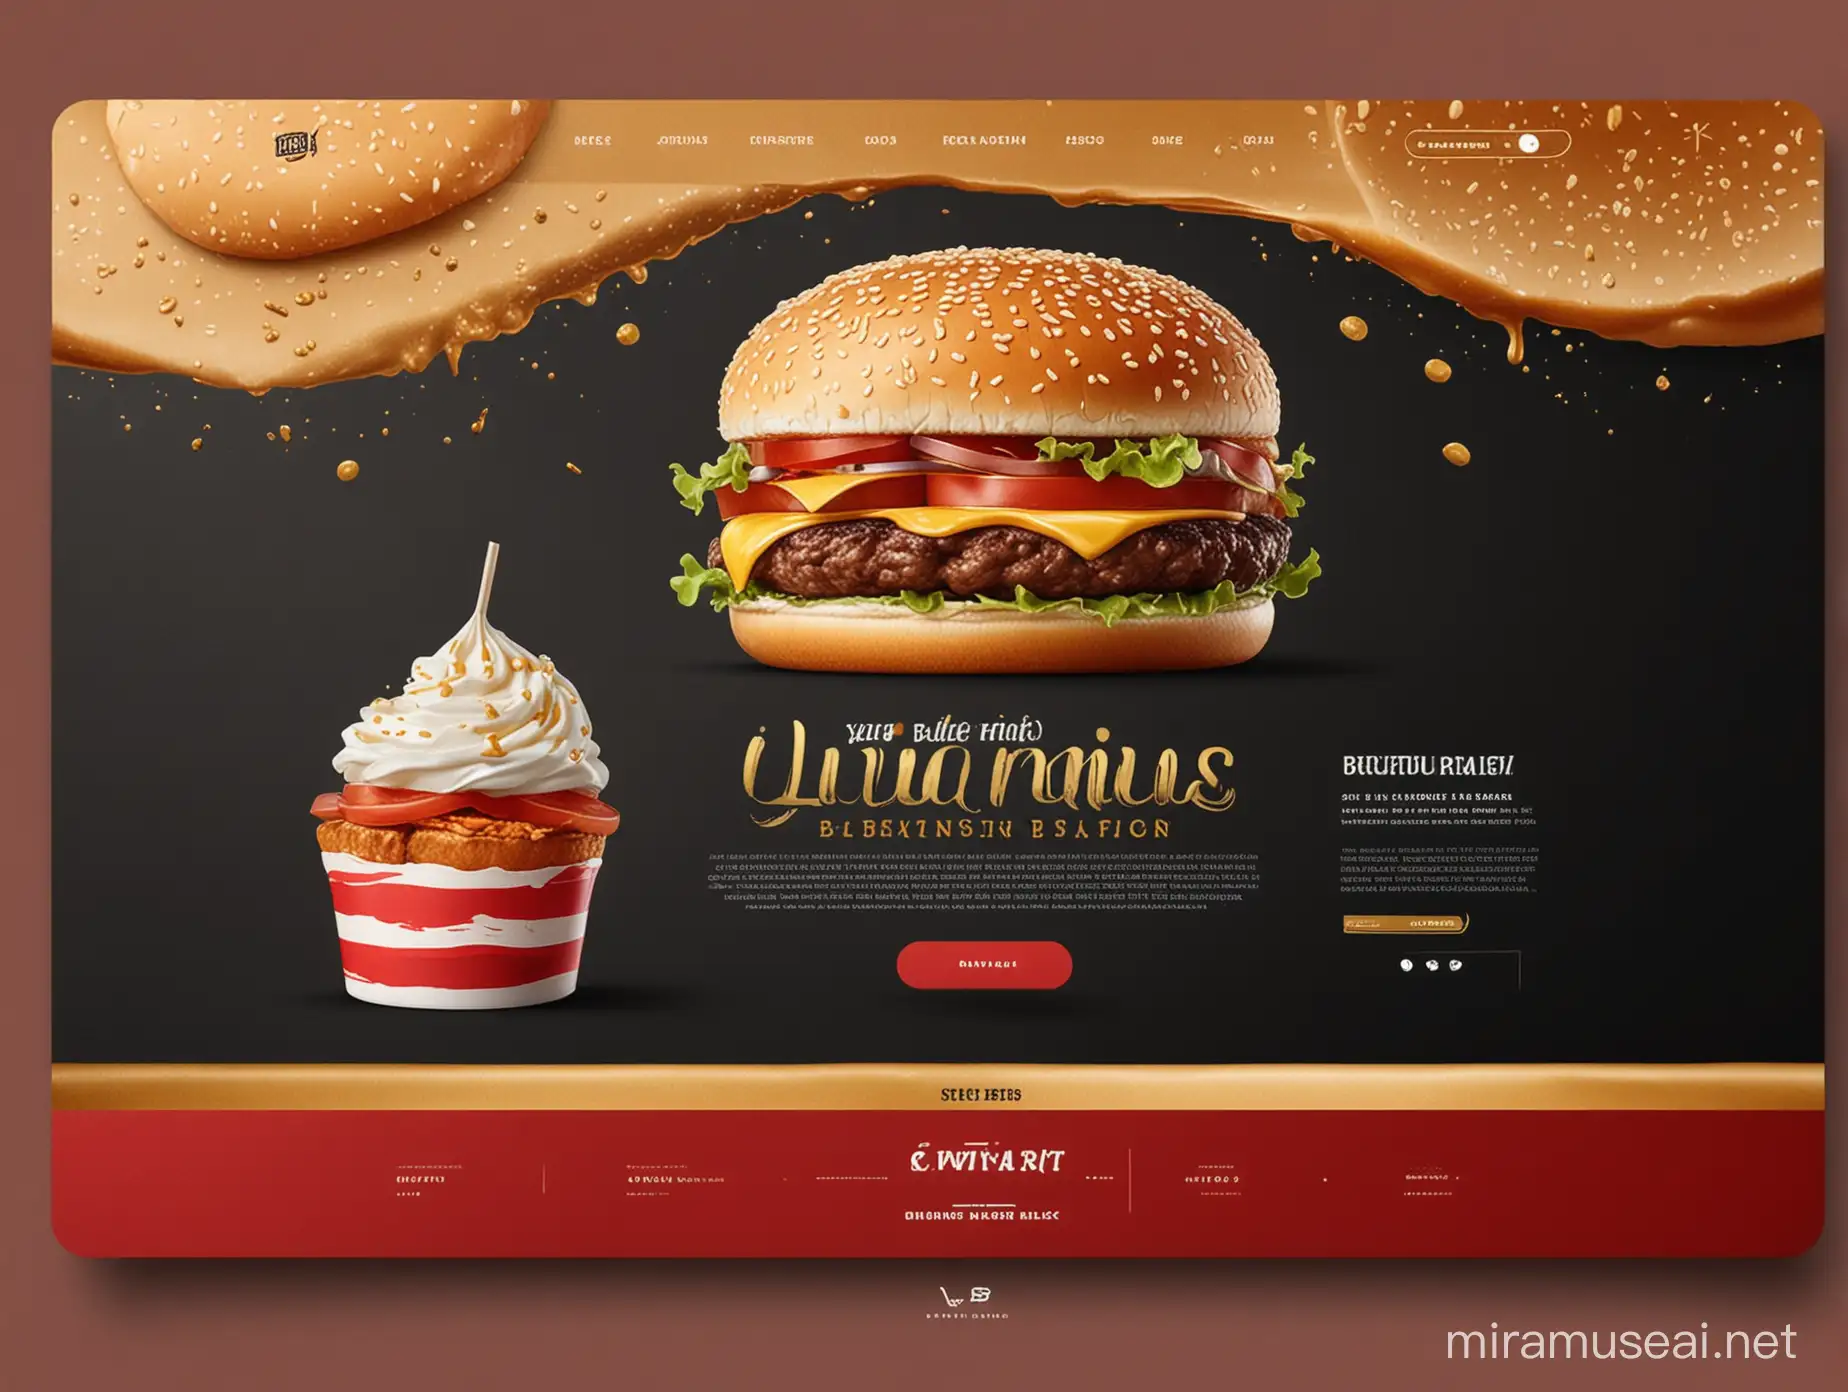 Elegant Burger Restaurant Web Design with Red White Gold and Black Theme